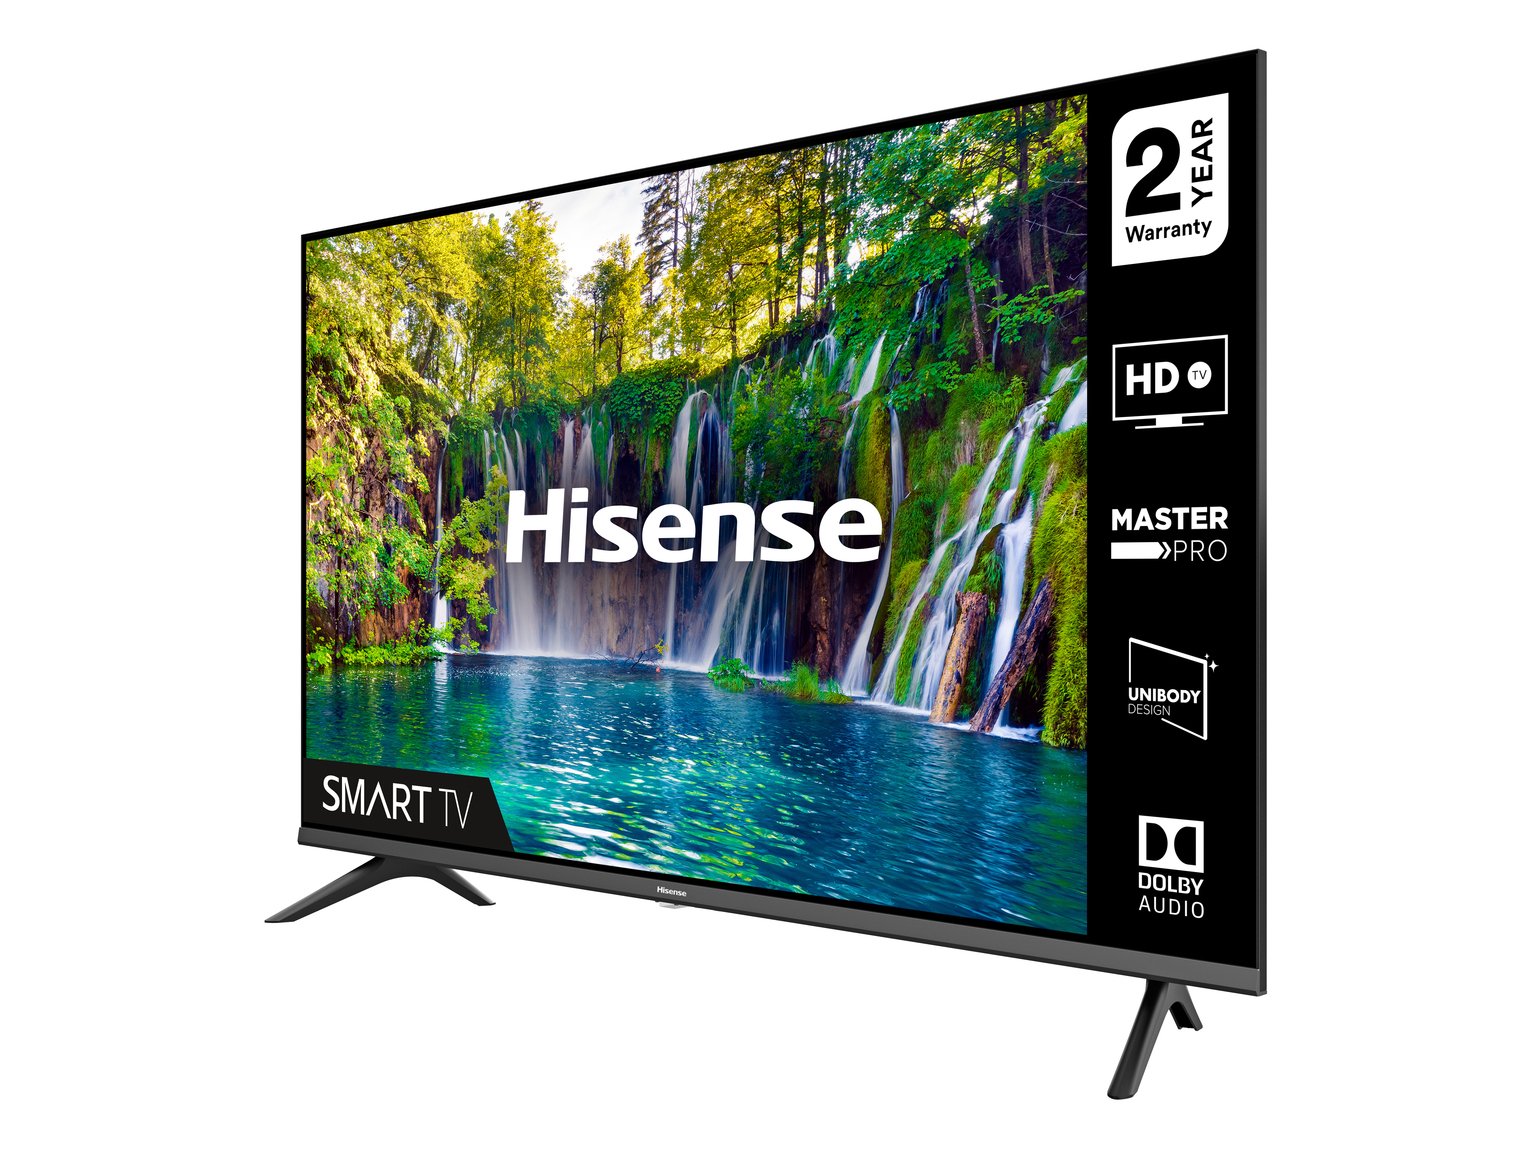 Hisense 32 Inch 32A5600FTUK Smart HD Ready LED TV Review